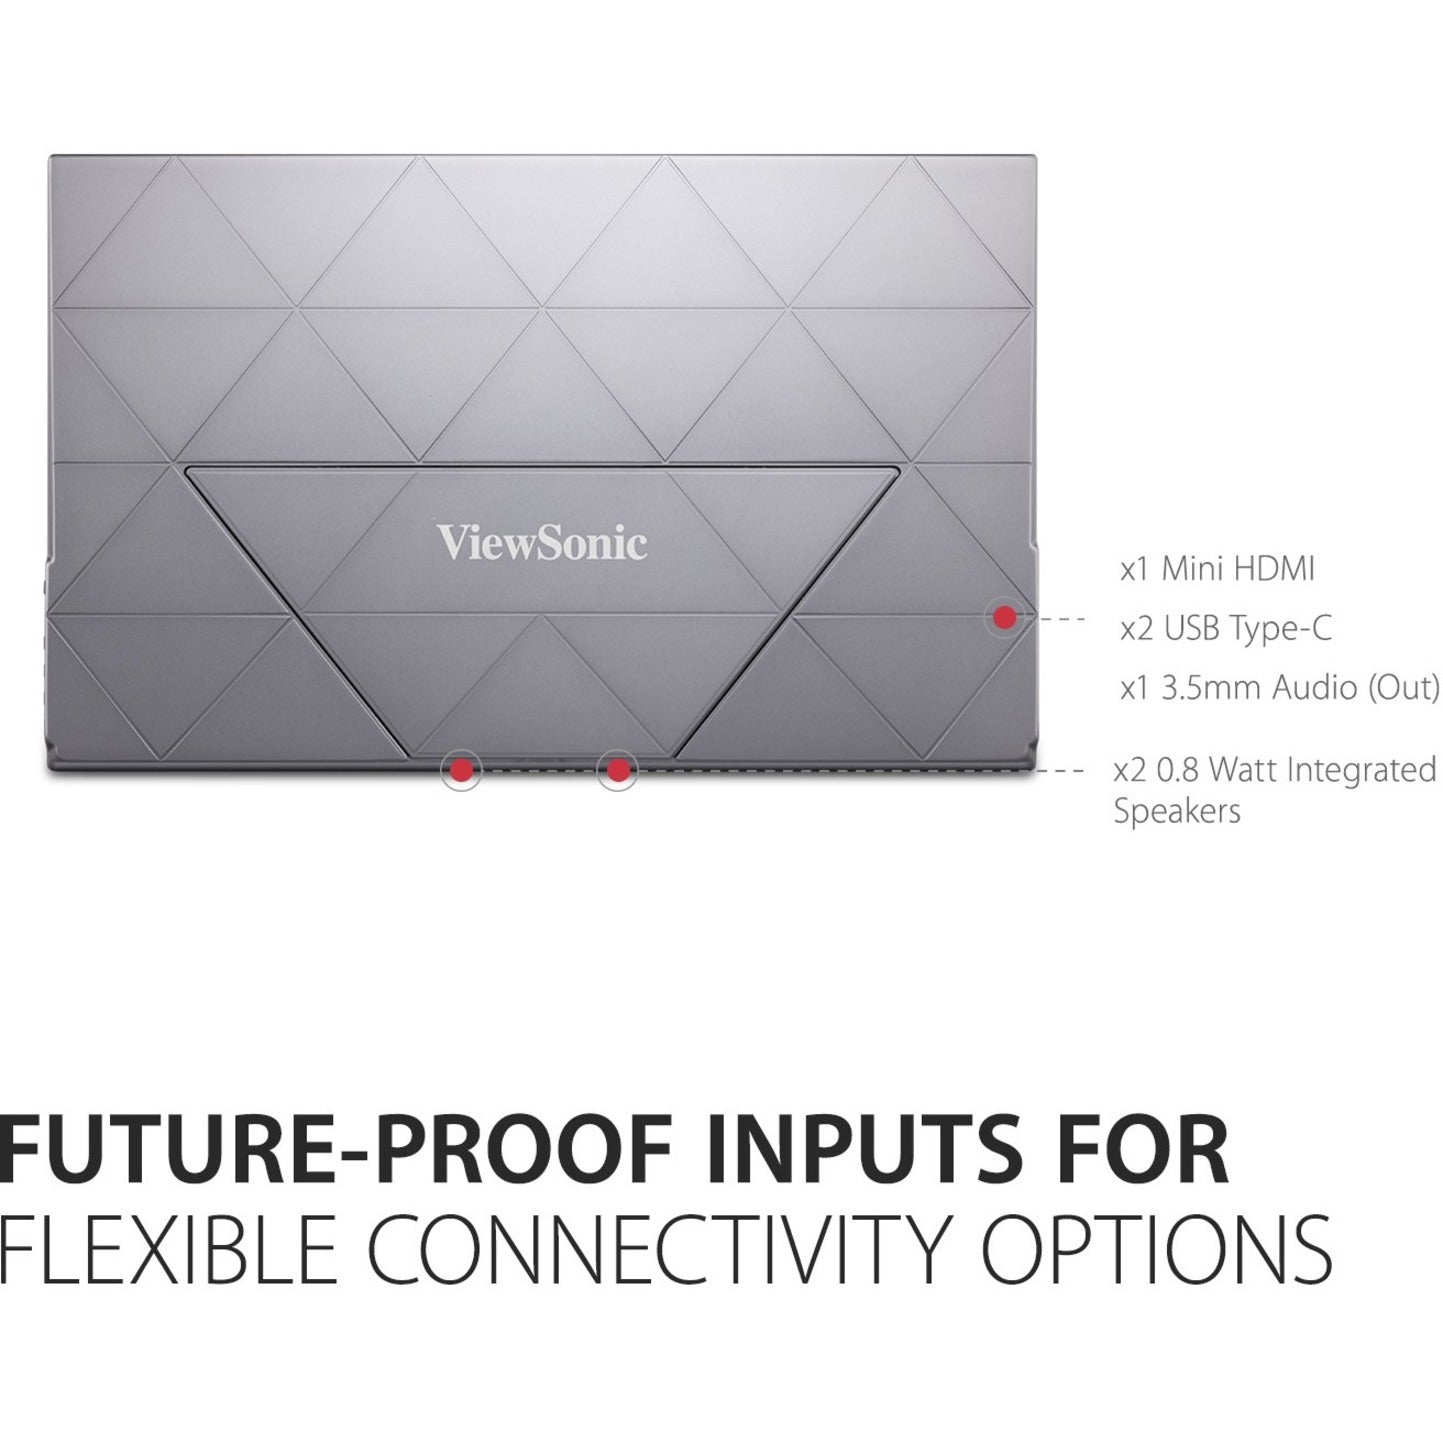 ViewSonic VX1755 17" Portable IPS Gaming Monitor 144Hz Refresh Rate AMD FreeSync Premium